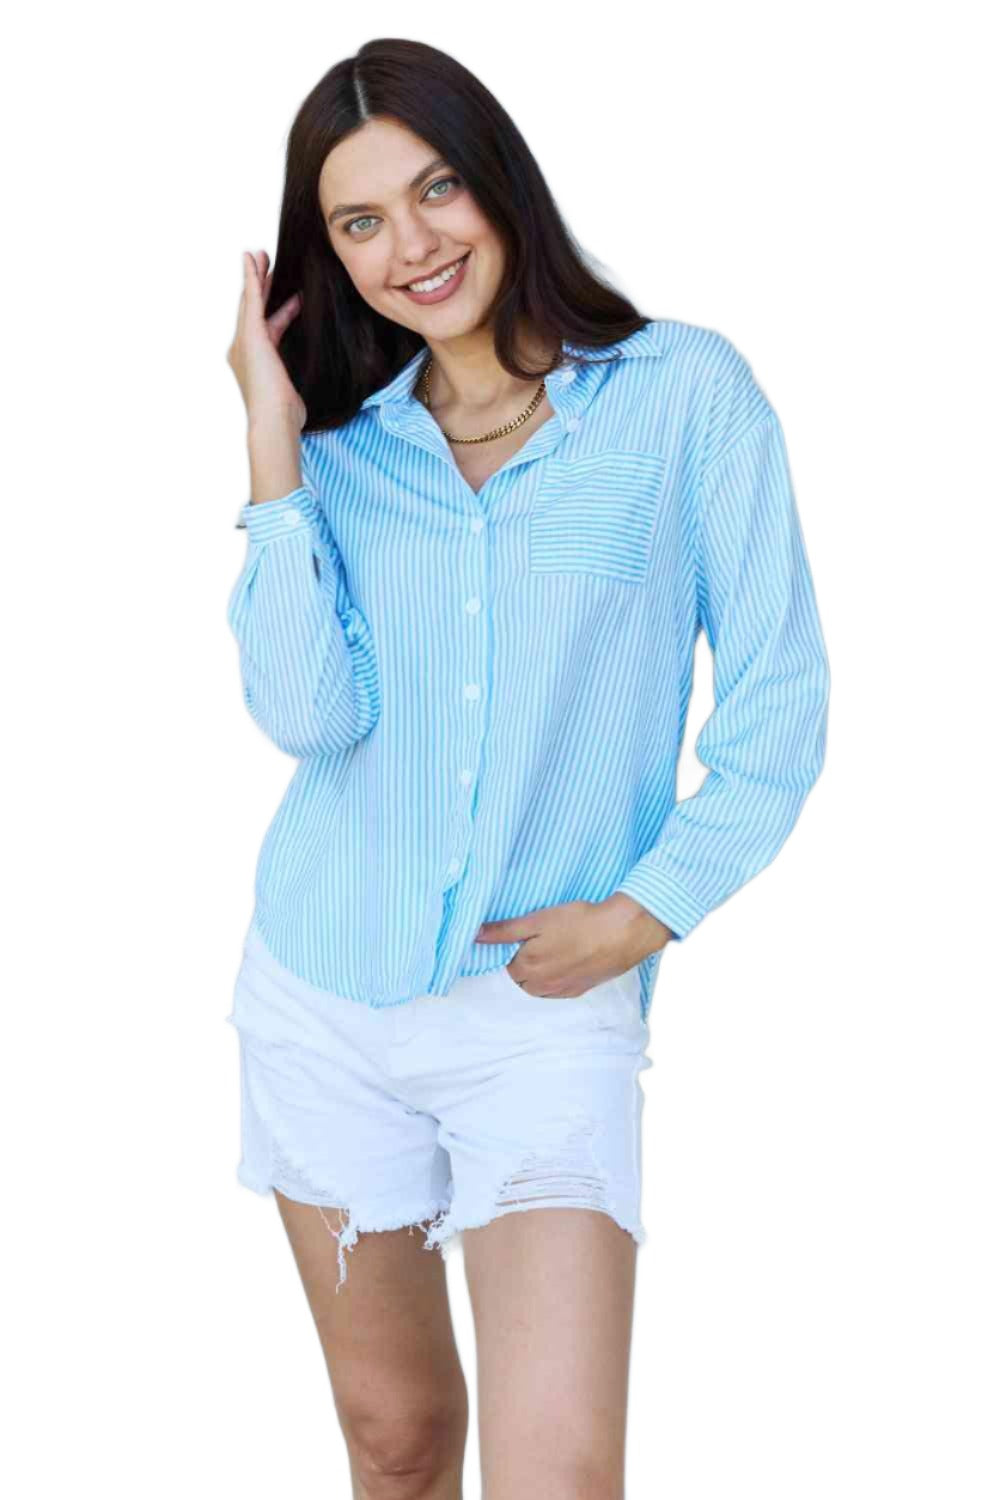 Women's Shirts Doublju She Means Business Striped Button Down Shirt Top